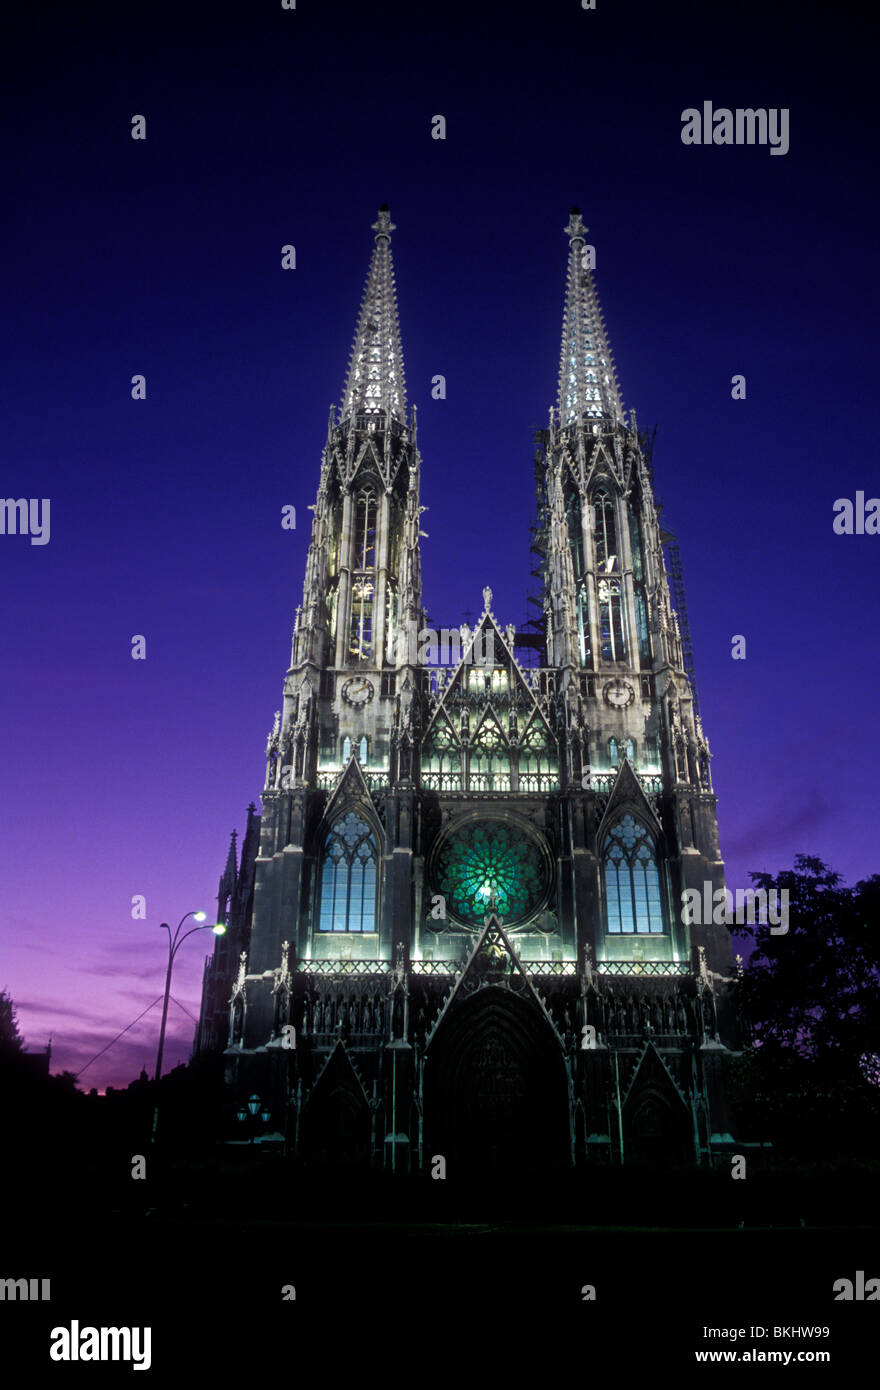 Chiesa votiva, votivkirche, piazza Roosevelt, rooseveltplatz, architettura revival gotico, la città di Vienna, Vienna, Austria, Europa Foto Stock